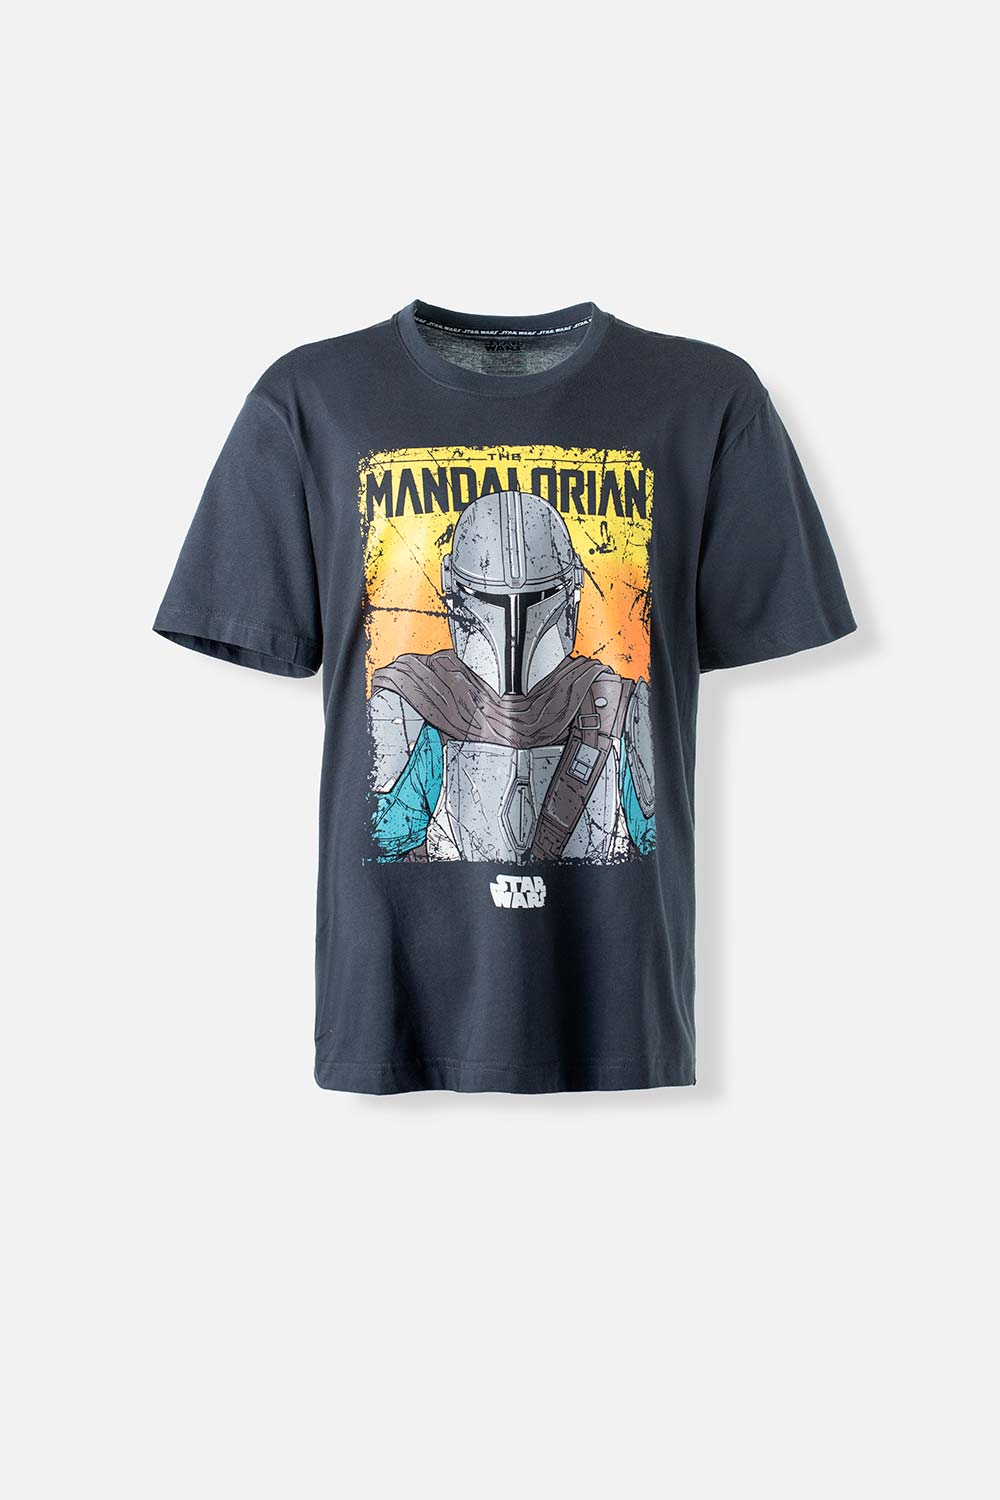 Camiseta de Mandalorian manga corta gris para hombre M-0